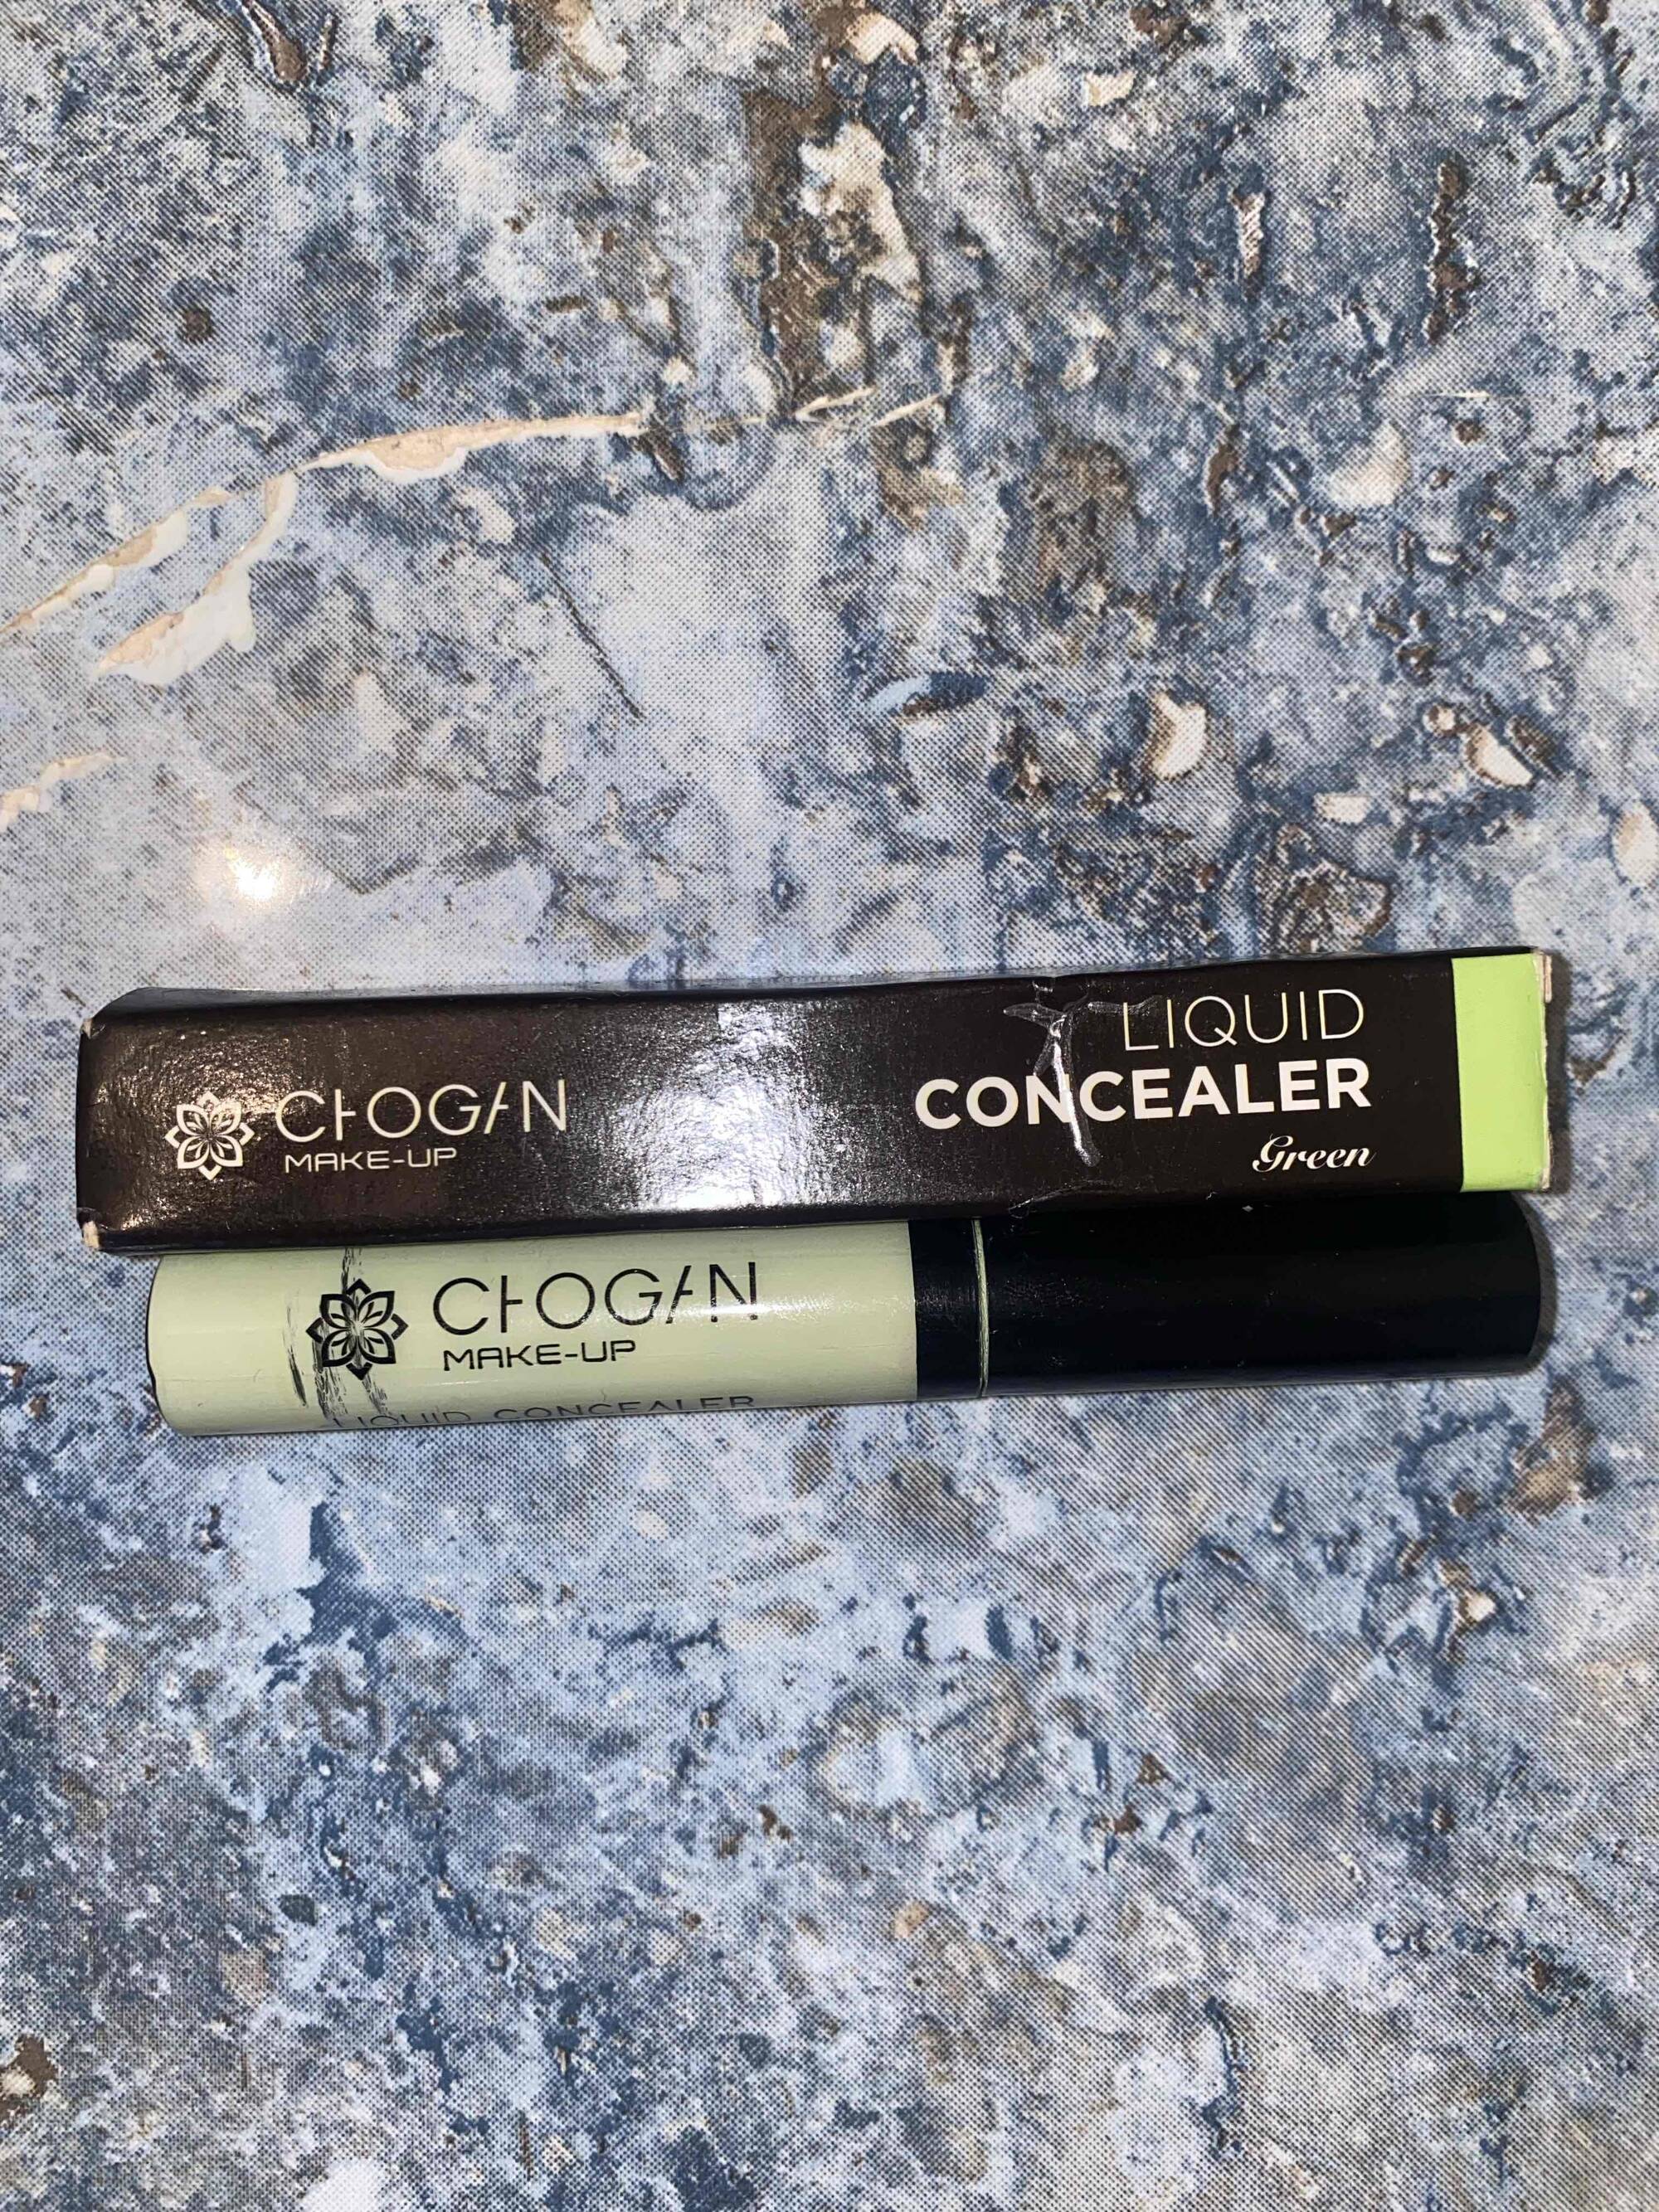 CHOGAN - Liquid concealer green